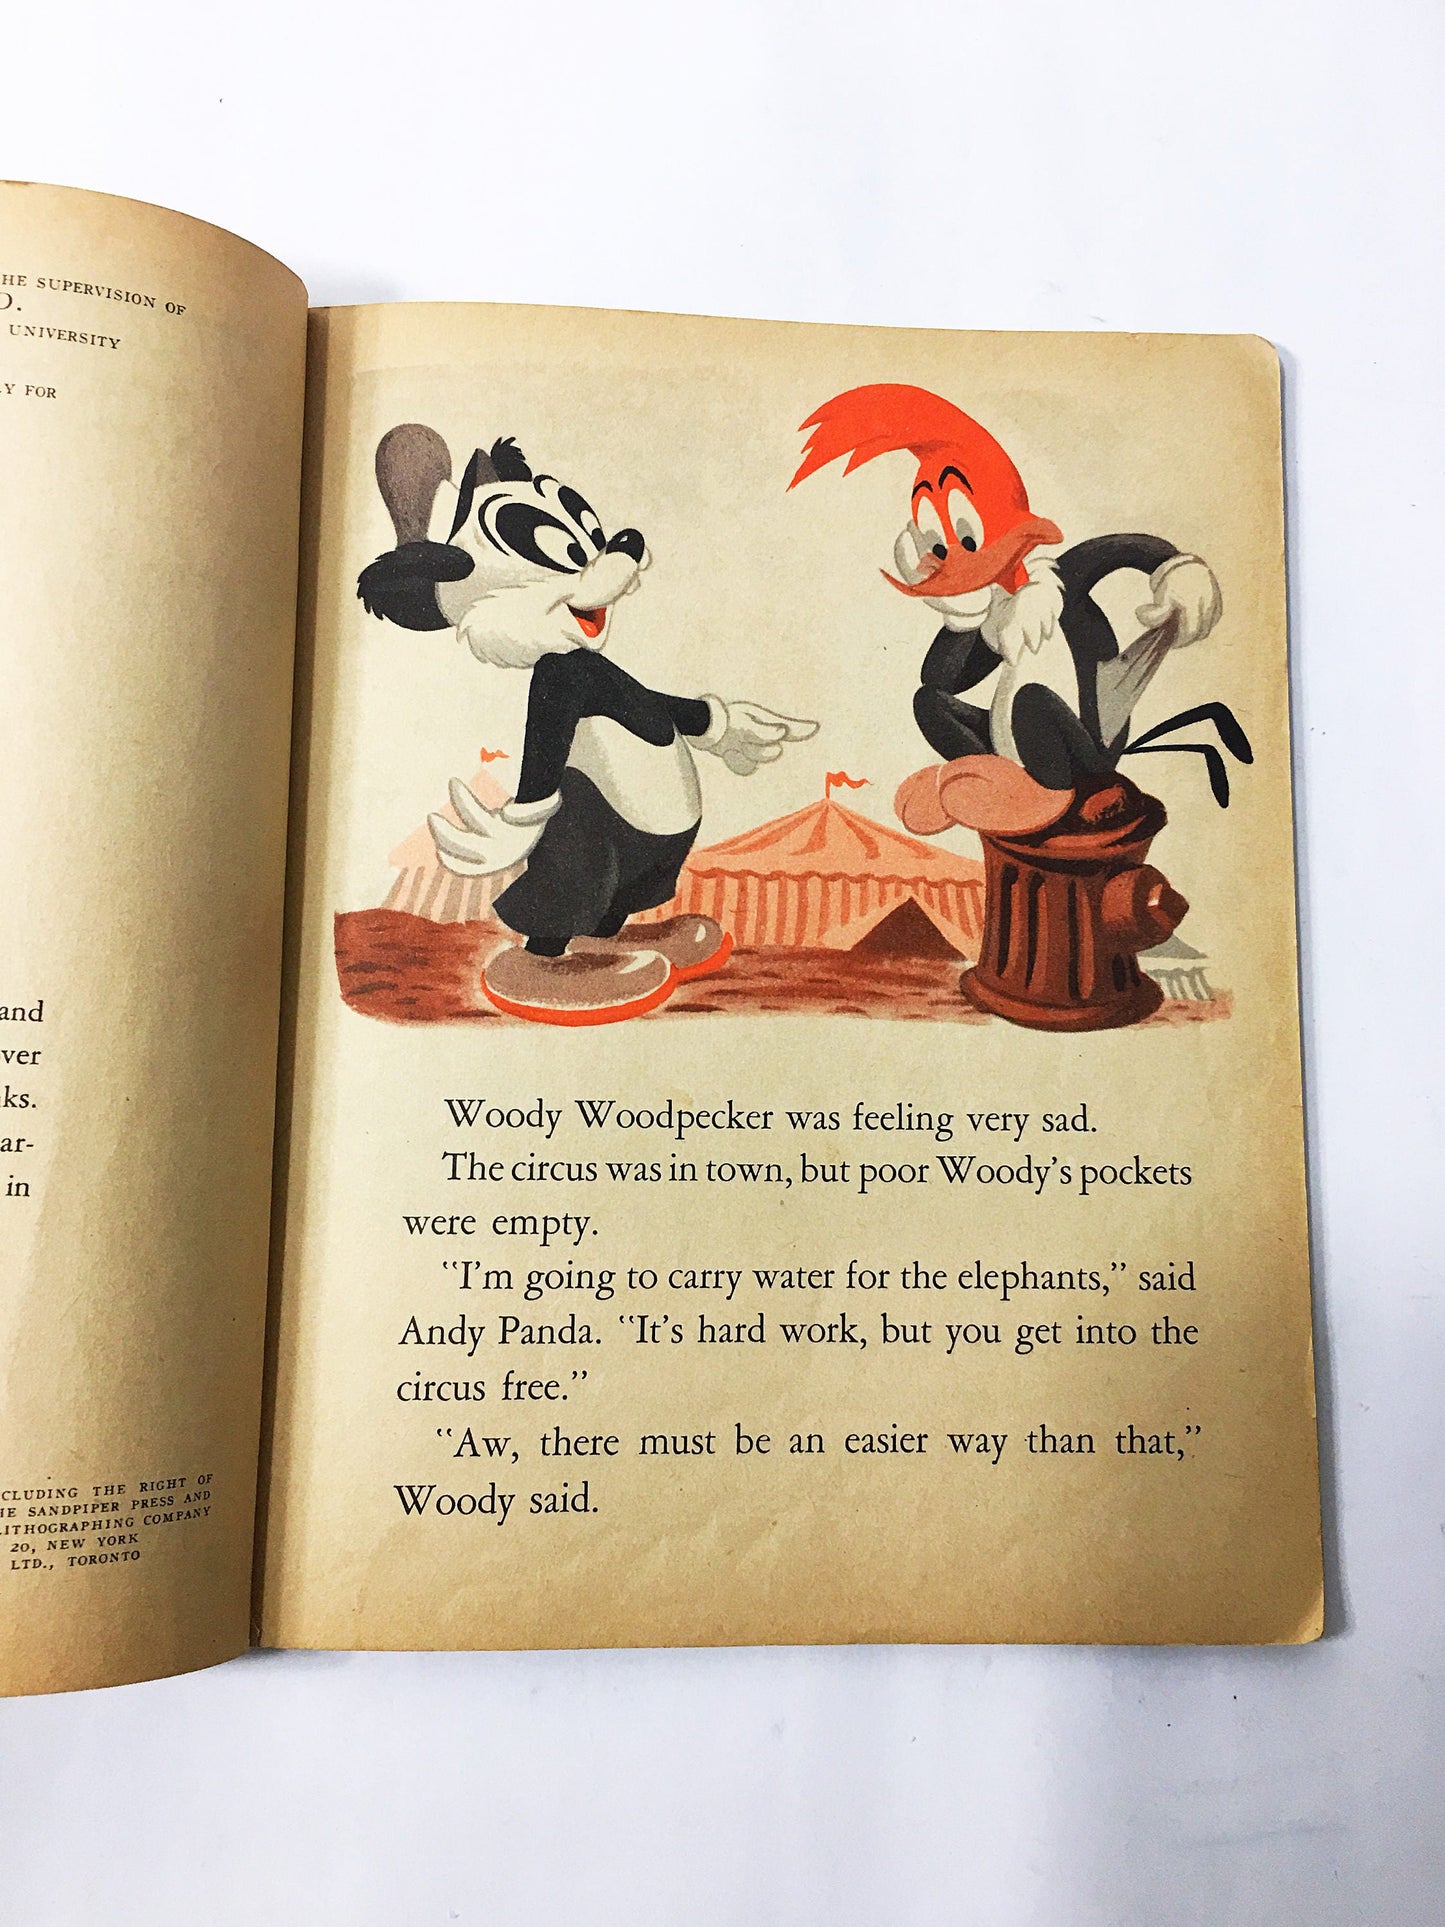 1952 Woody Woodpecker Joins the Circus. Warner Brothers Little Golden Book. Walter Lantz. First Edition children's book. Golden Press